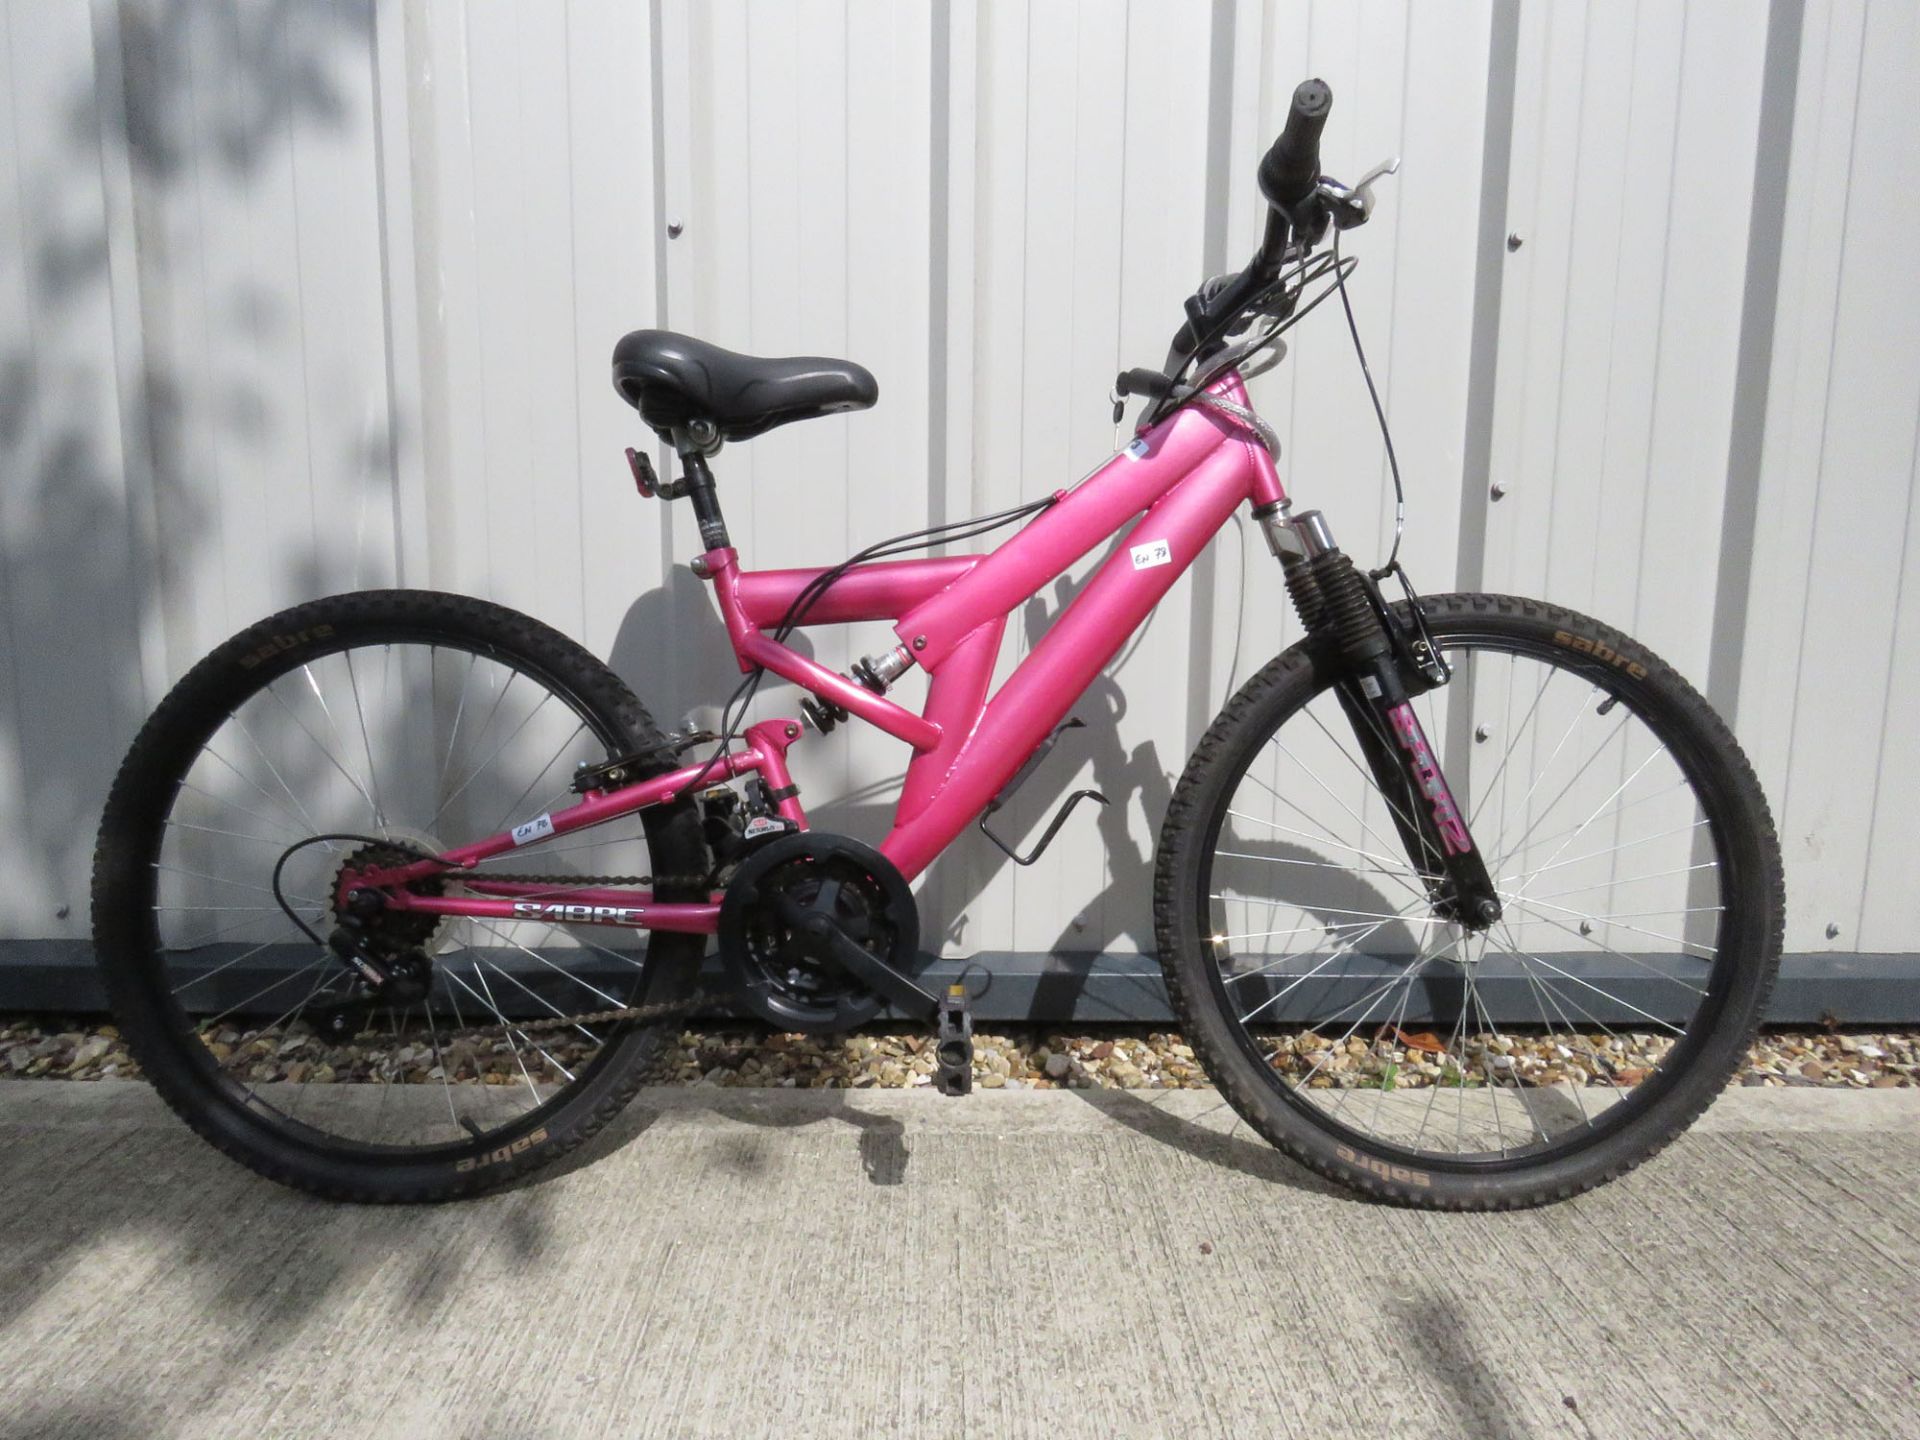 Sabre Mountain bike in pink full suspension